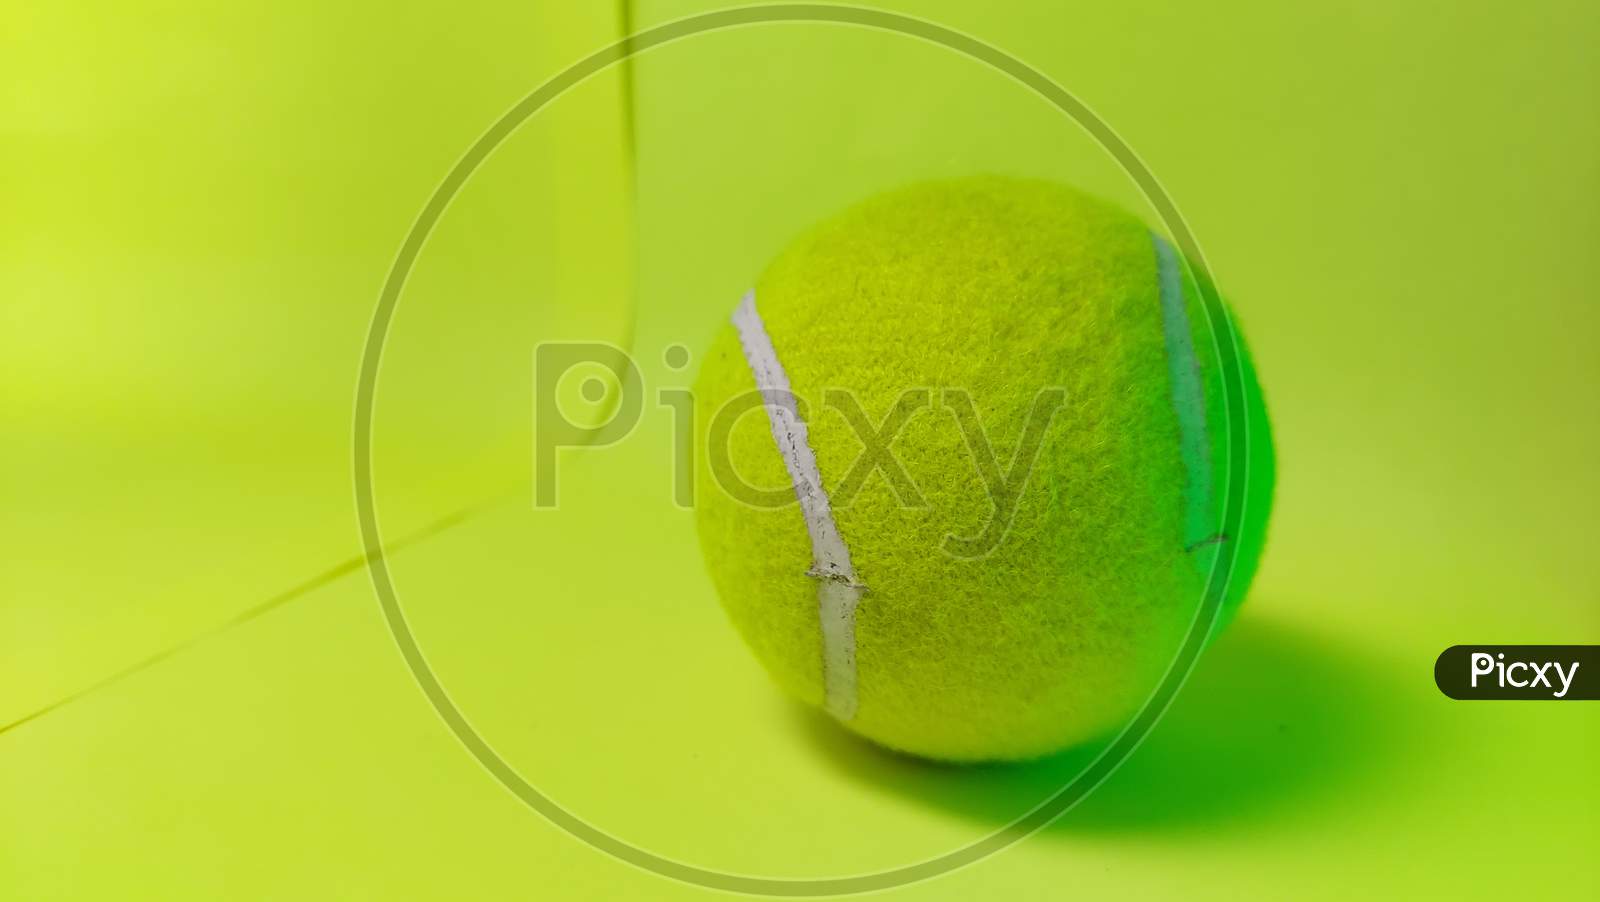 Tennis ball in dynamic lighting